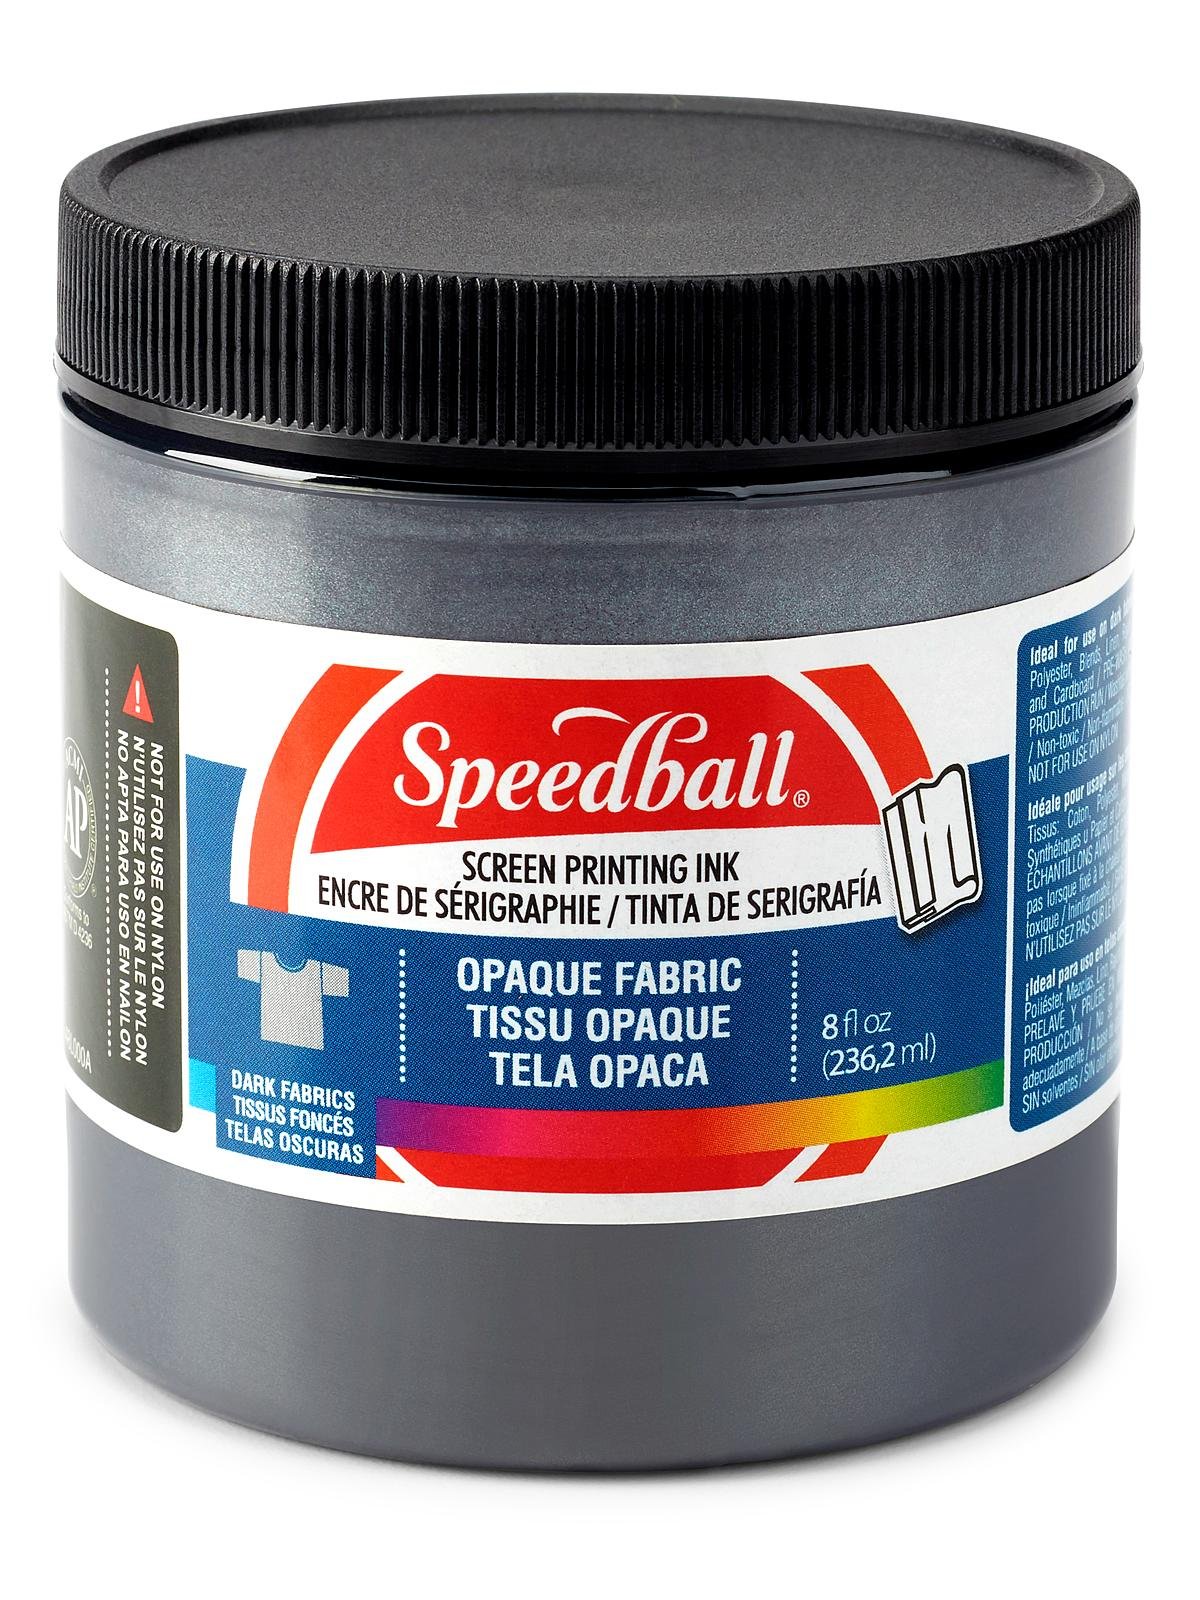 Speedball - Opaque Fabric Screen Printing Inks